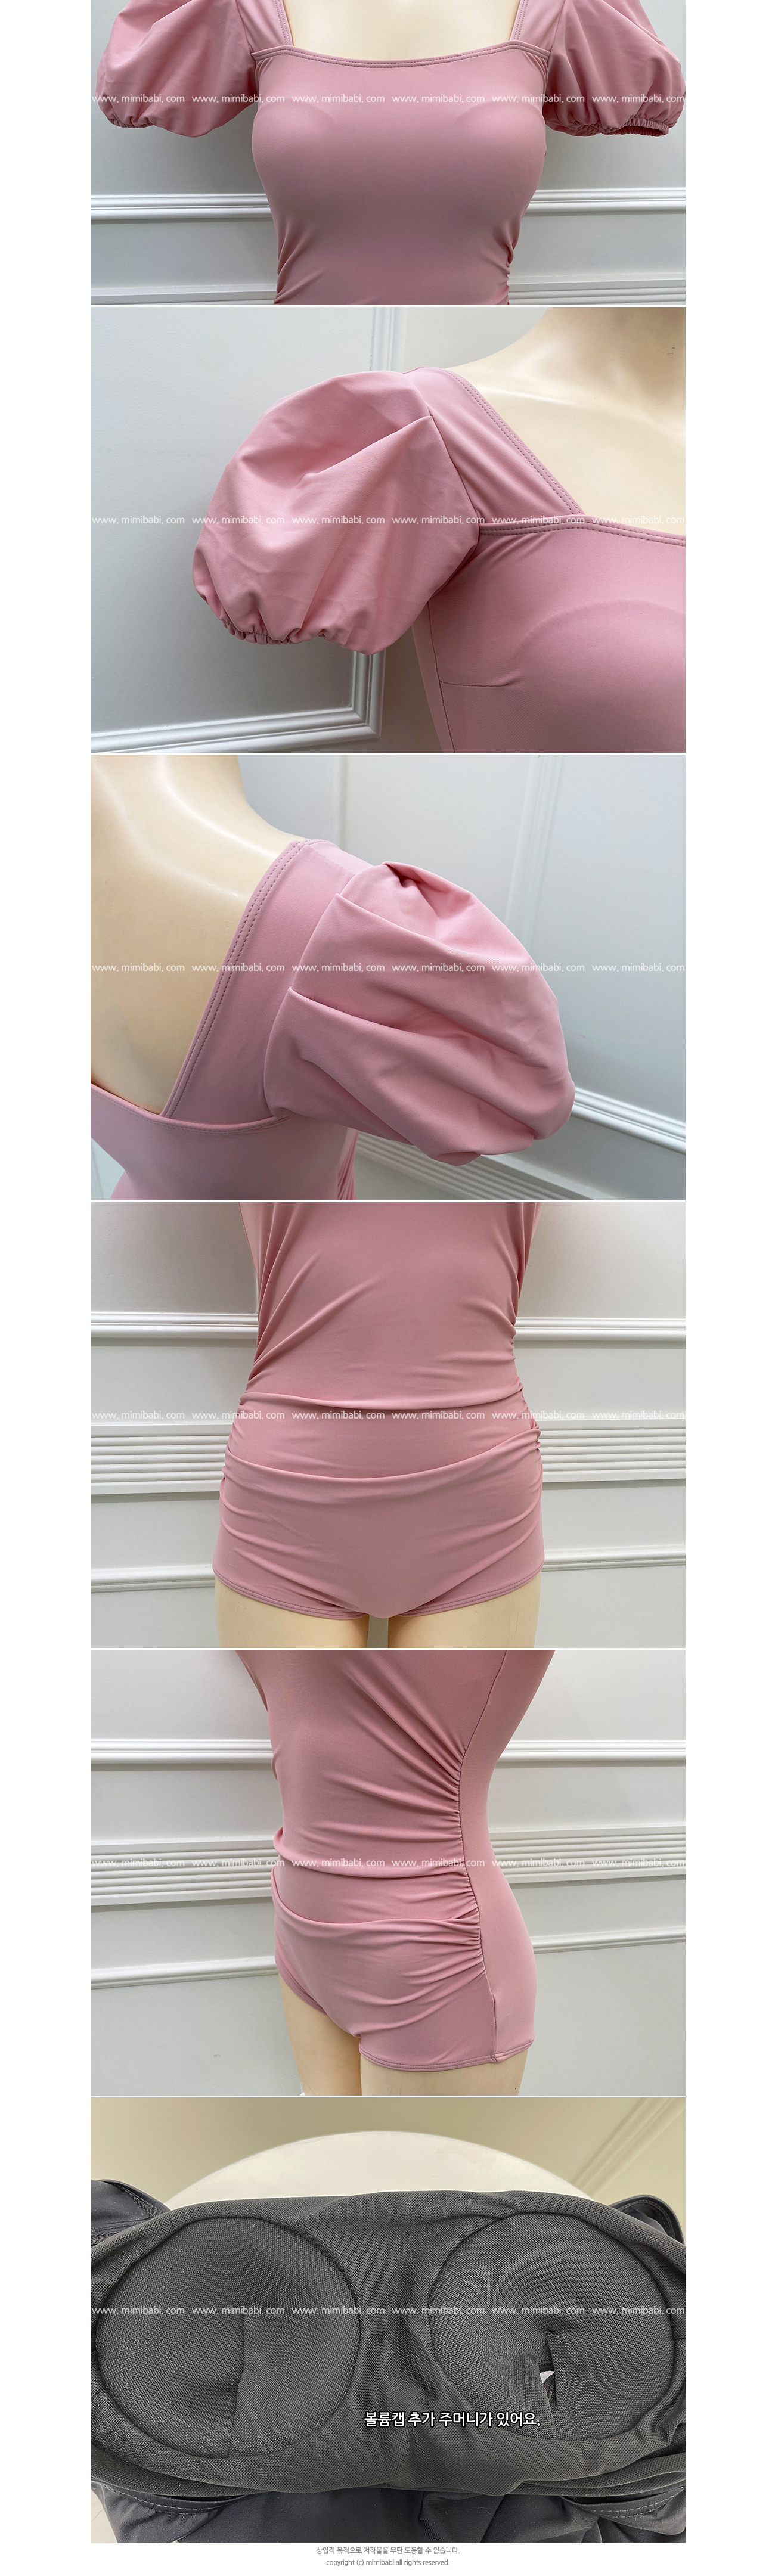 accessories pink color image-S1L5